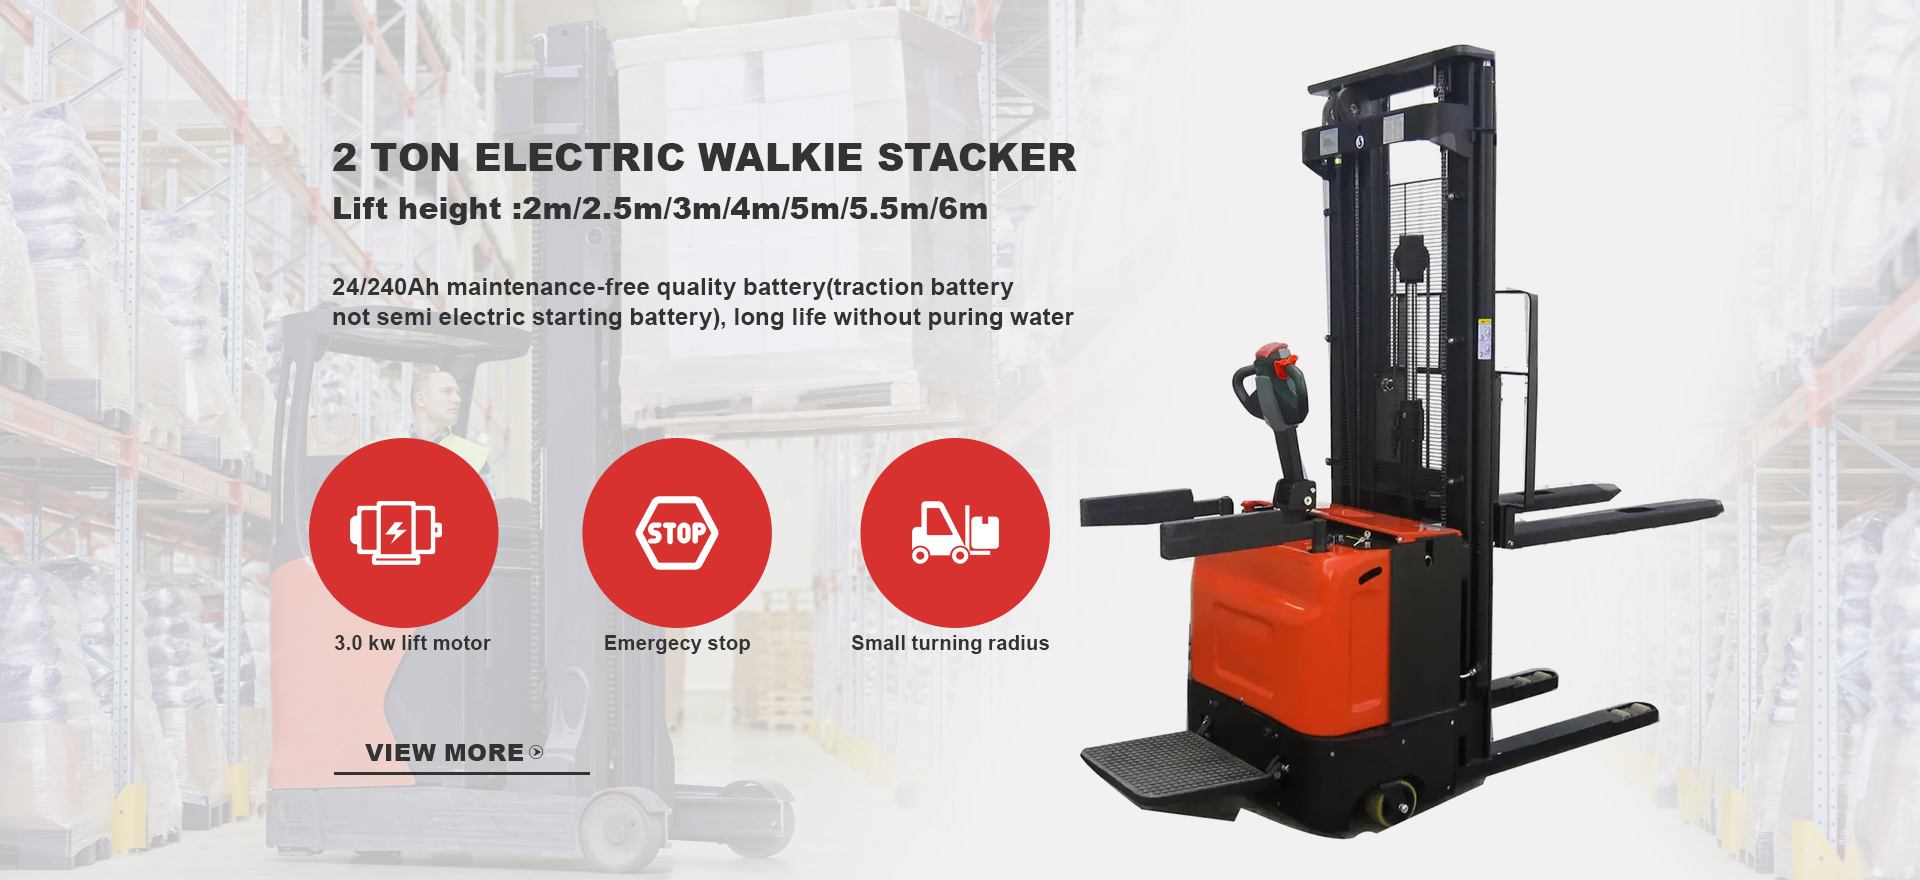 2 Ton Electric Walkie Stacker